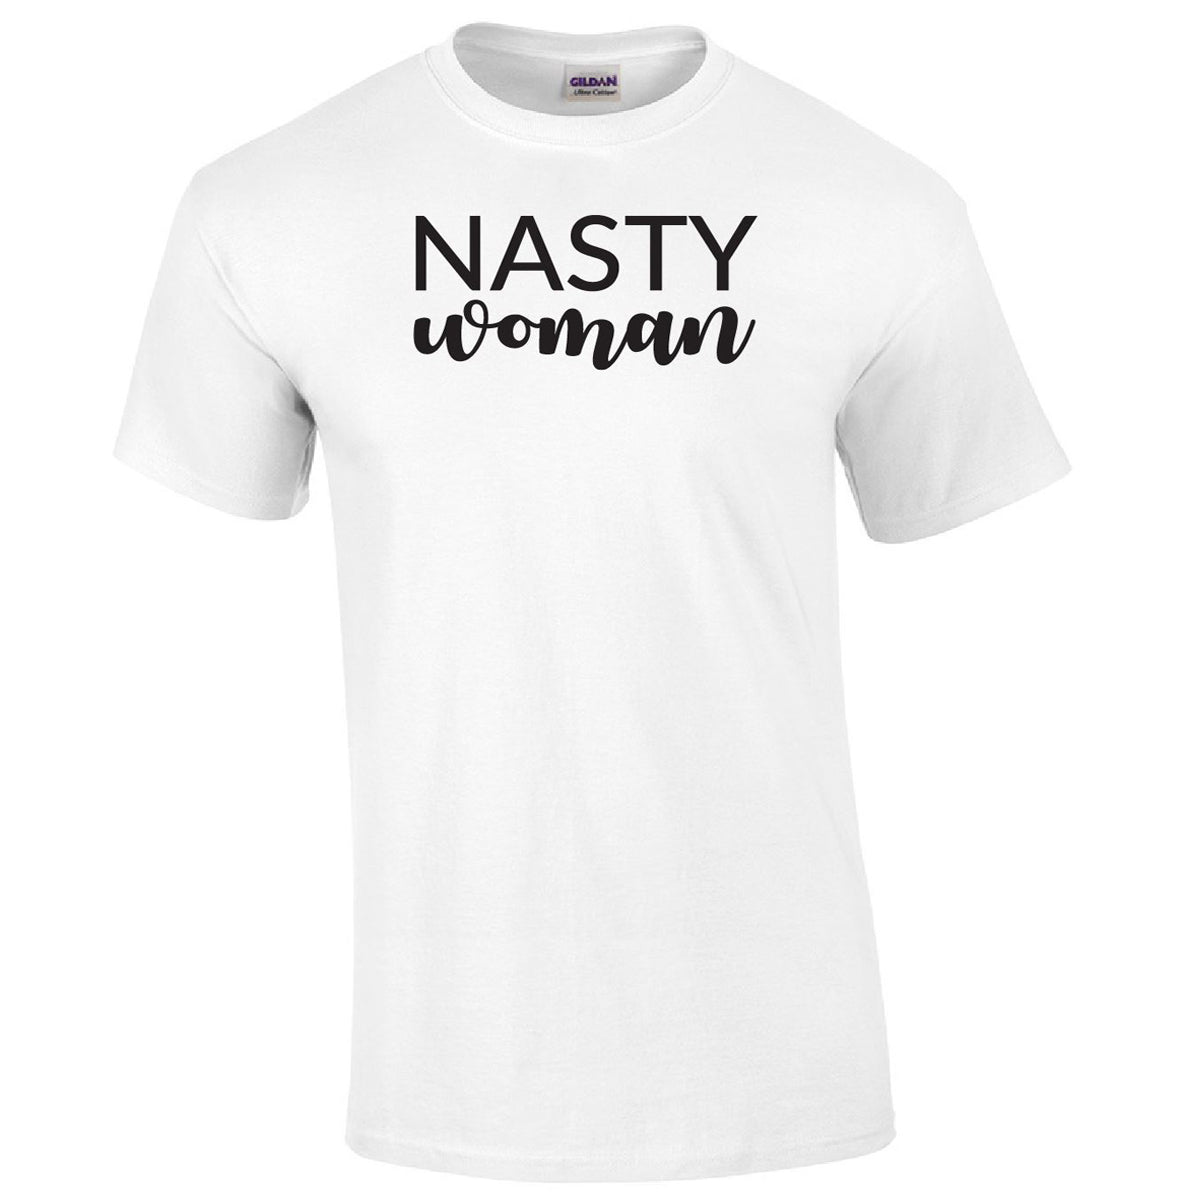 Nasty Woman Printed Tee Humorous Shirt 411 Youth Medium White Youth